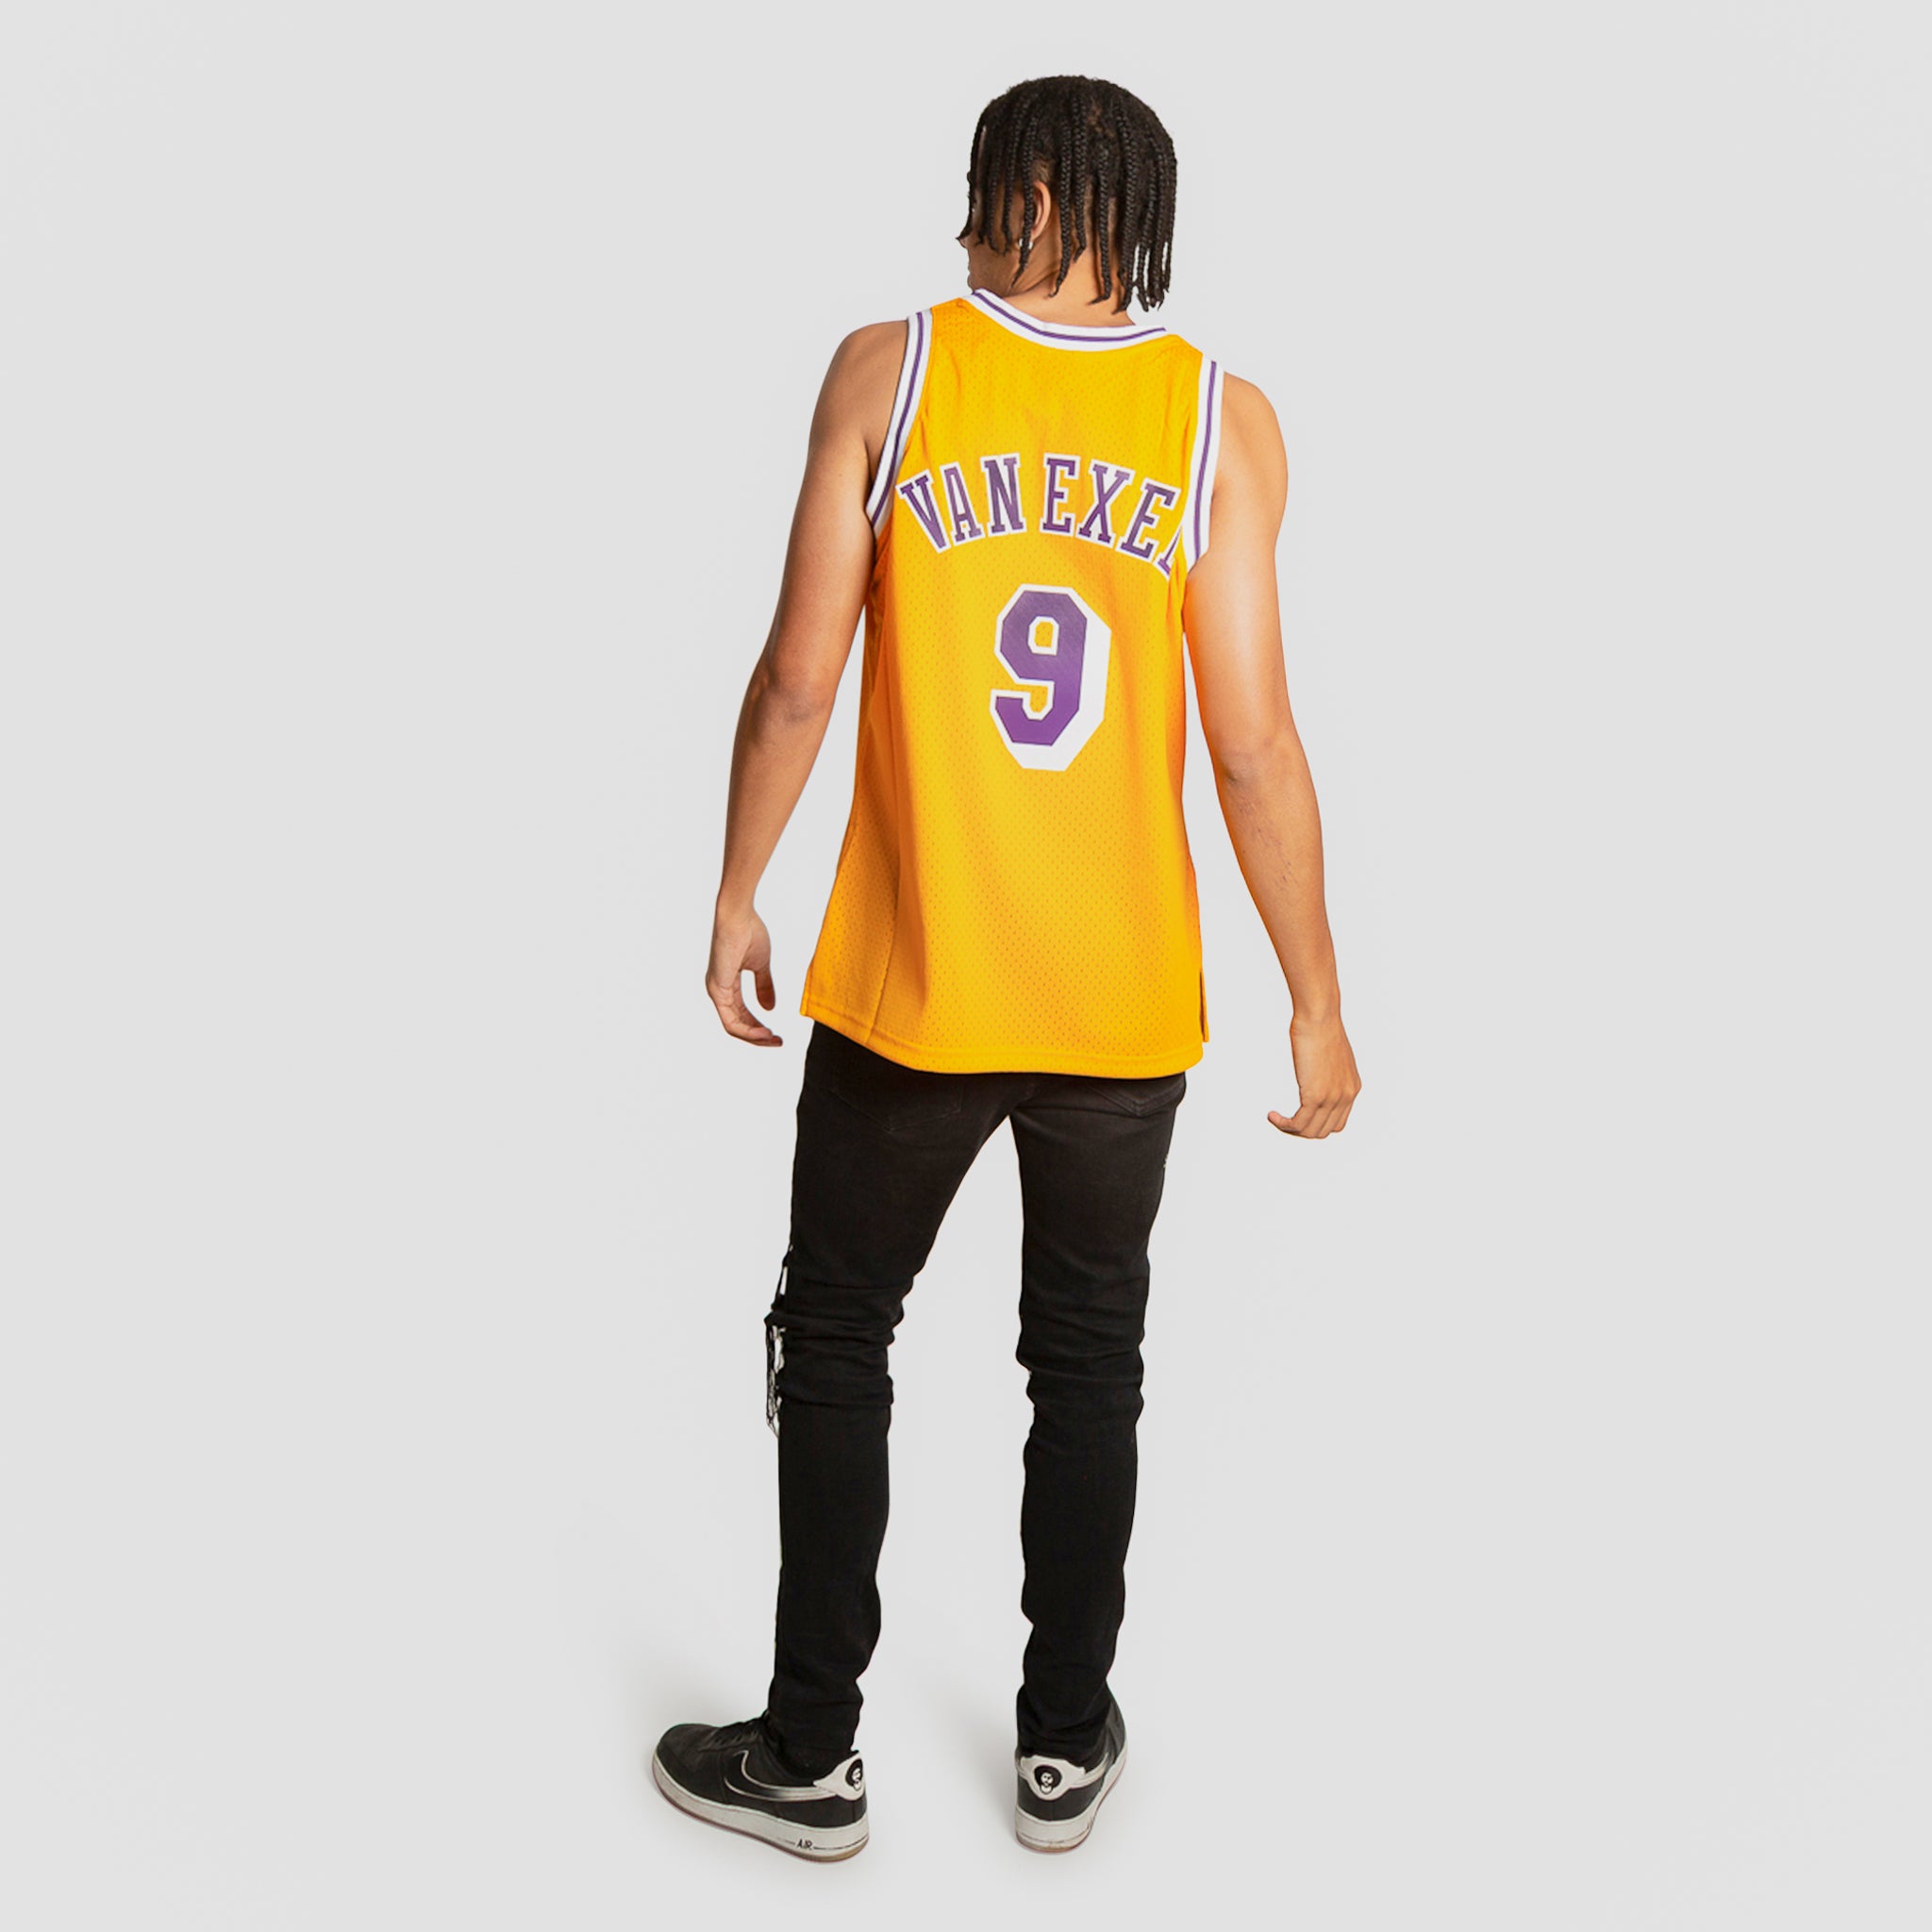 New Mitchell & Ness Los Angeles Lakers Nick Van Exel Swingman Jersey Size  Medium